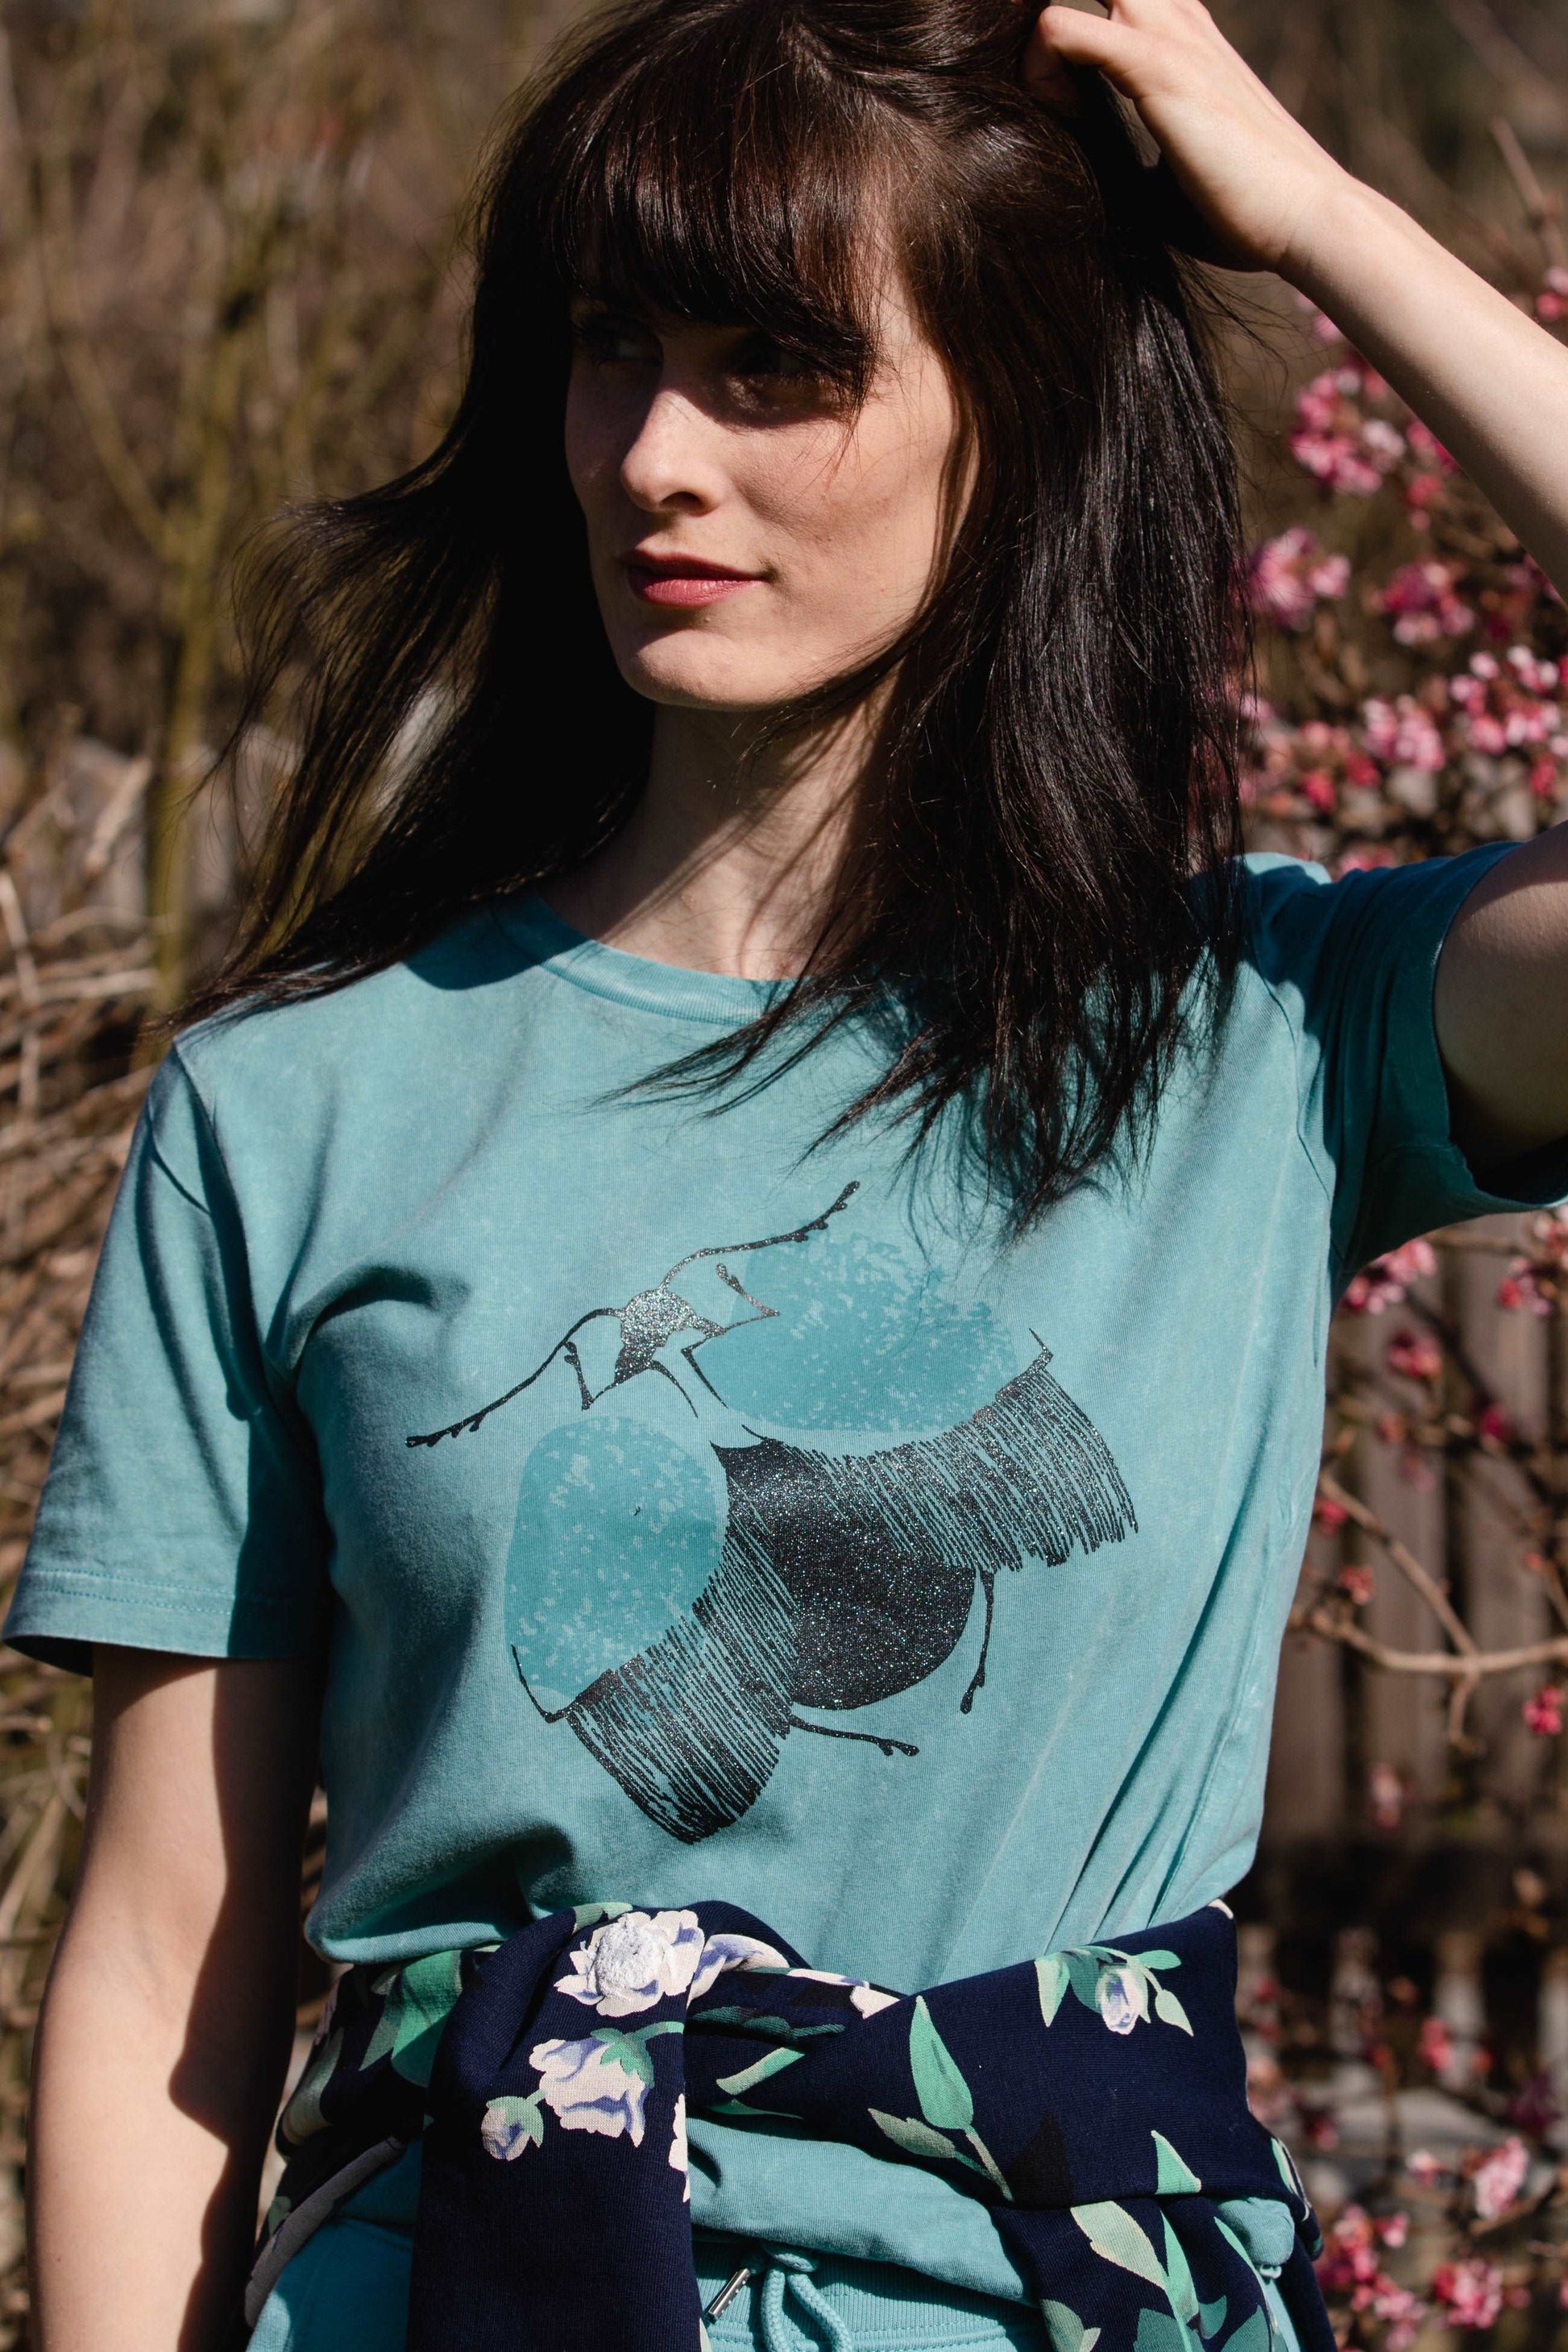 Mint majica in abstrakten metulj - Unisex - 180 g bombaž / vintage izgled bombaža